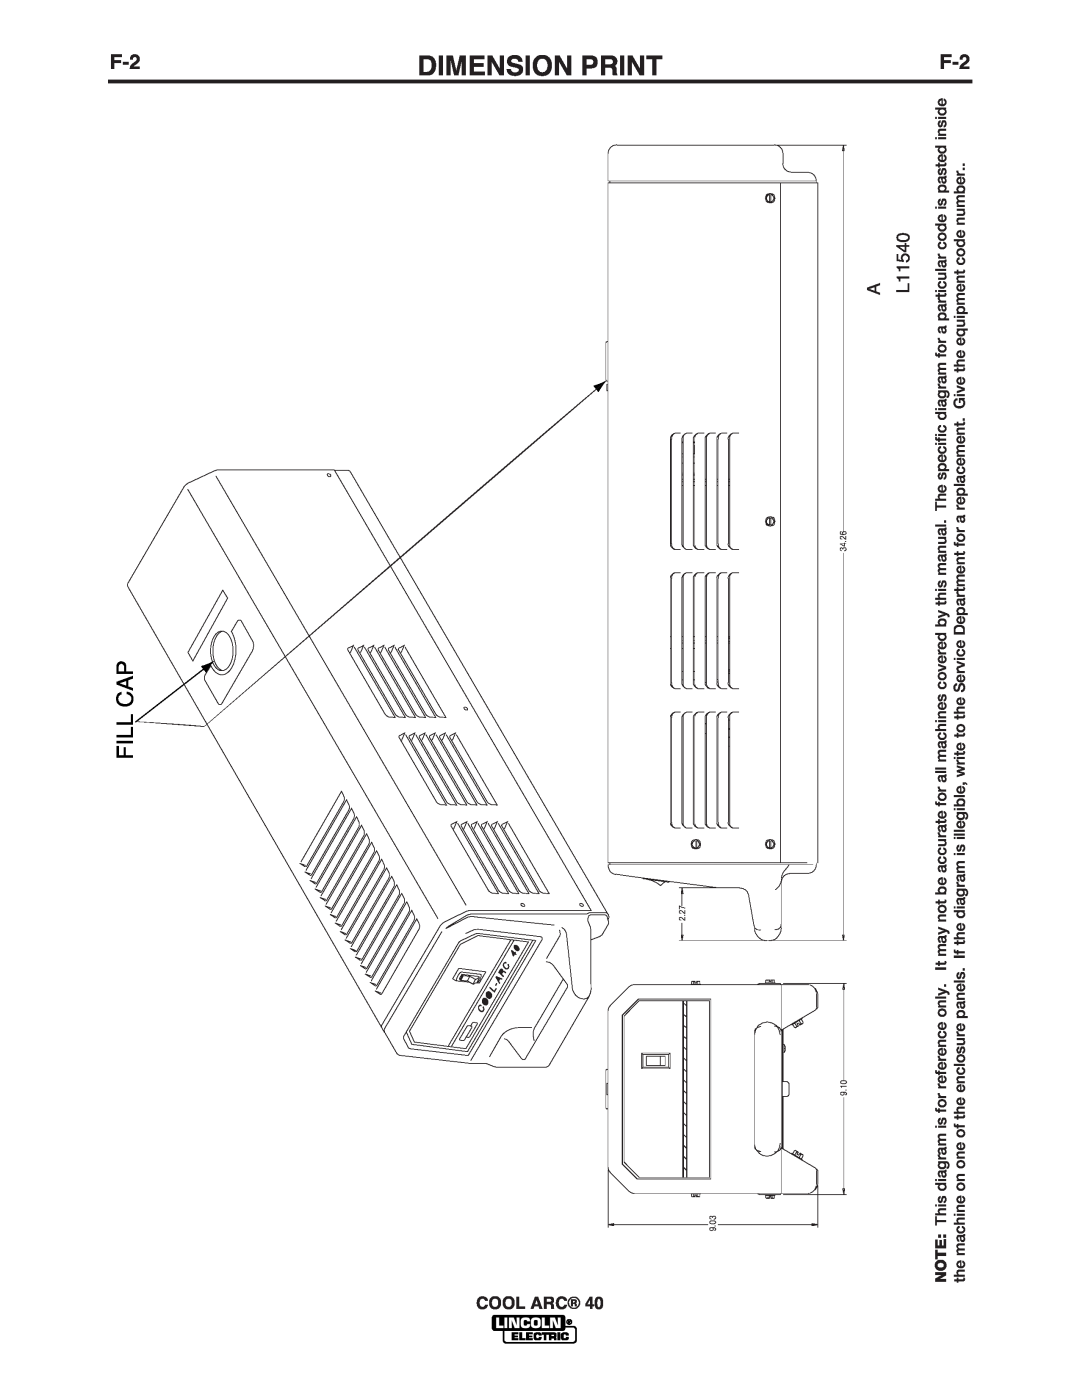 Lincoln Electric IM911 manual Dimension Print, Fill Cap, A L11540, Cool Arc, 9.03, 9.10, 2.27 34.26 